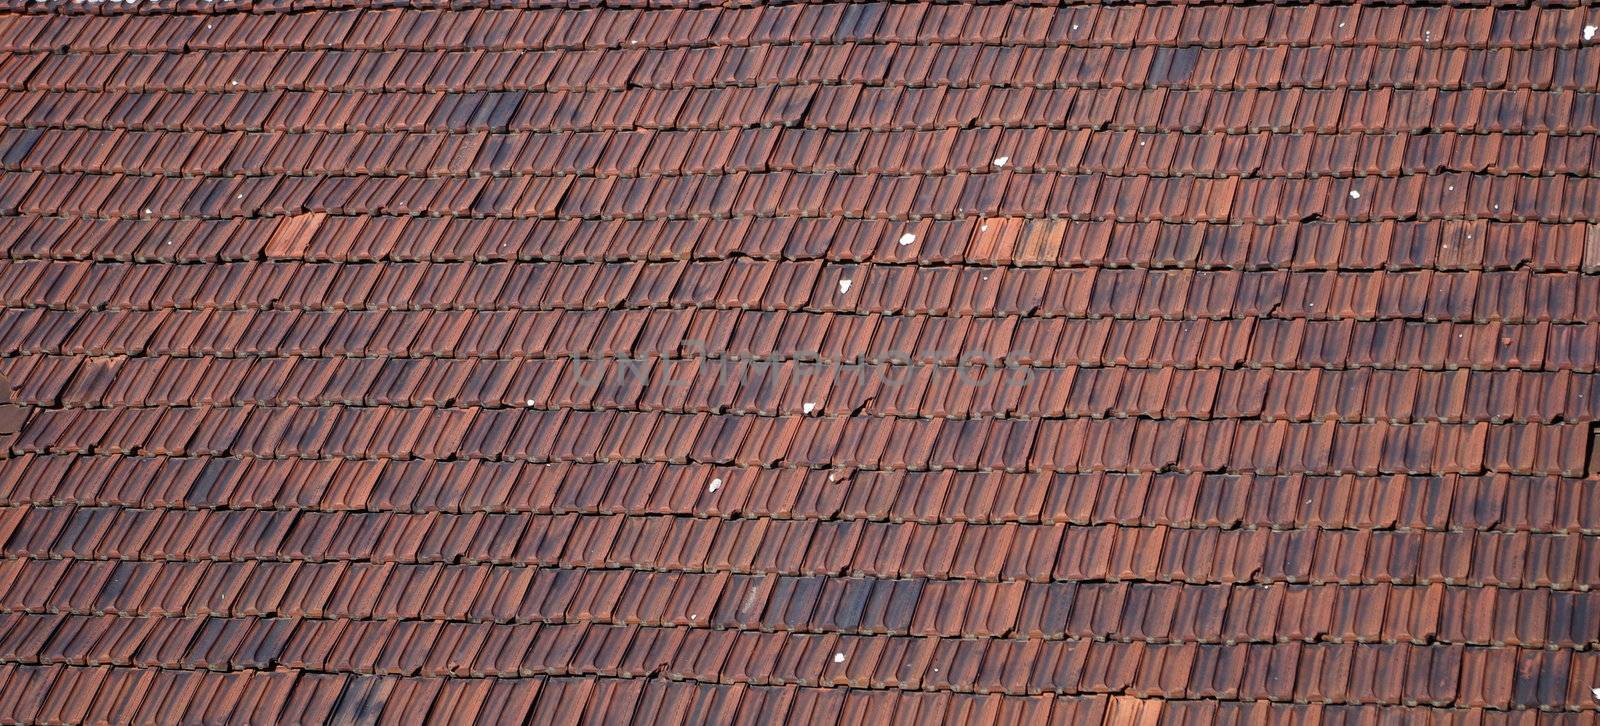 Roof Tile Pattern by Stoyanov